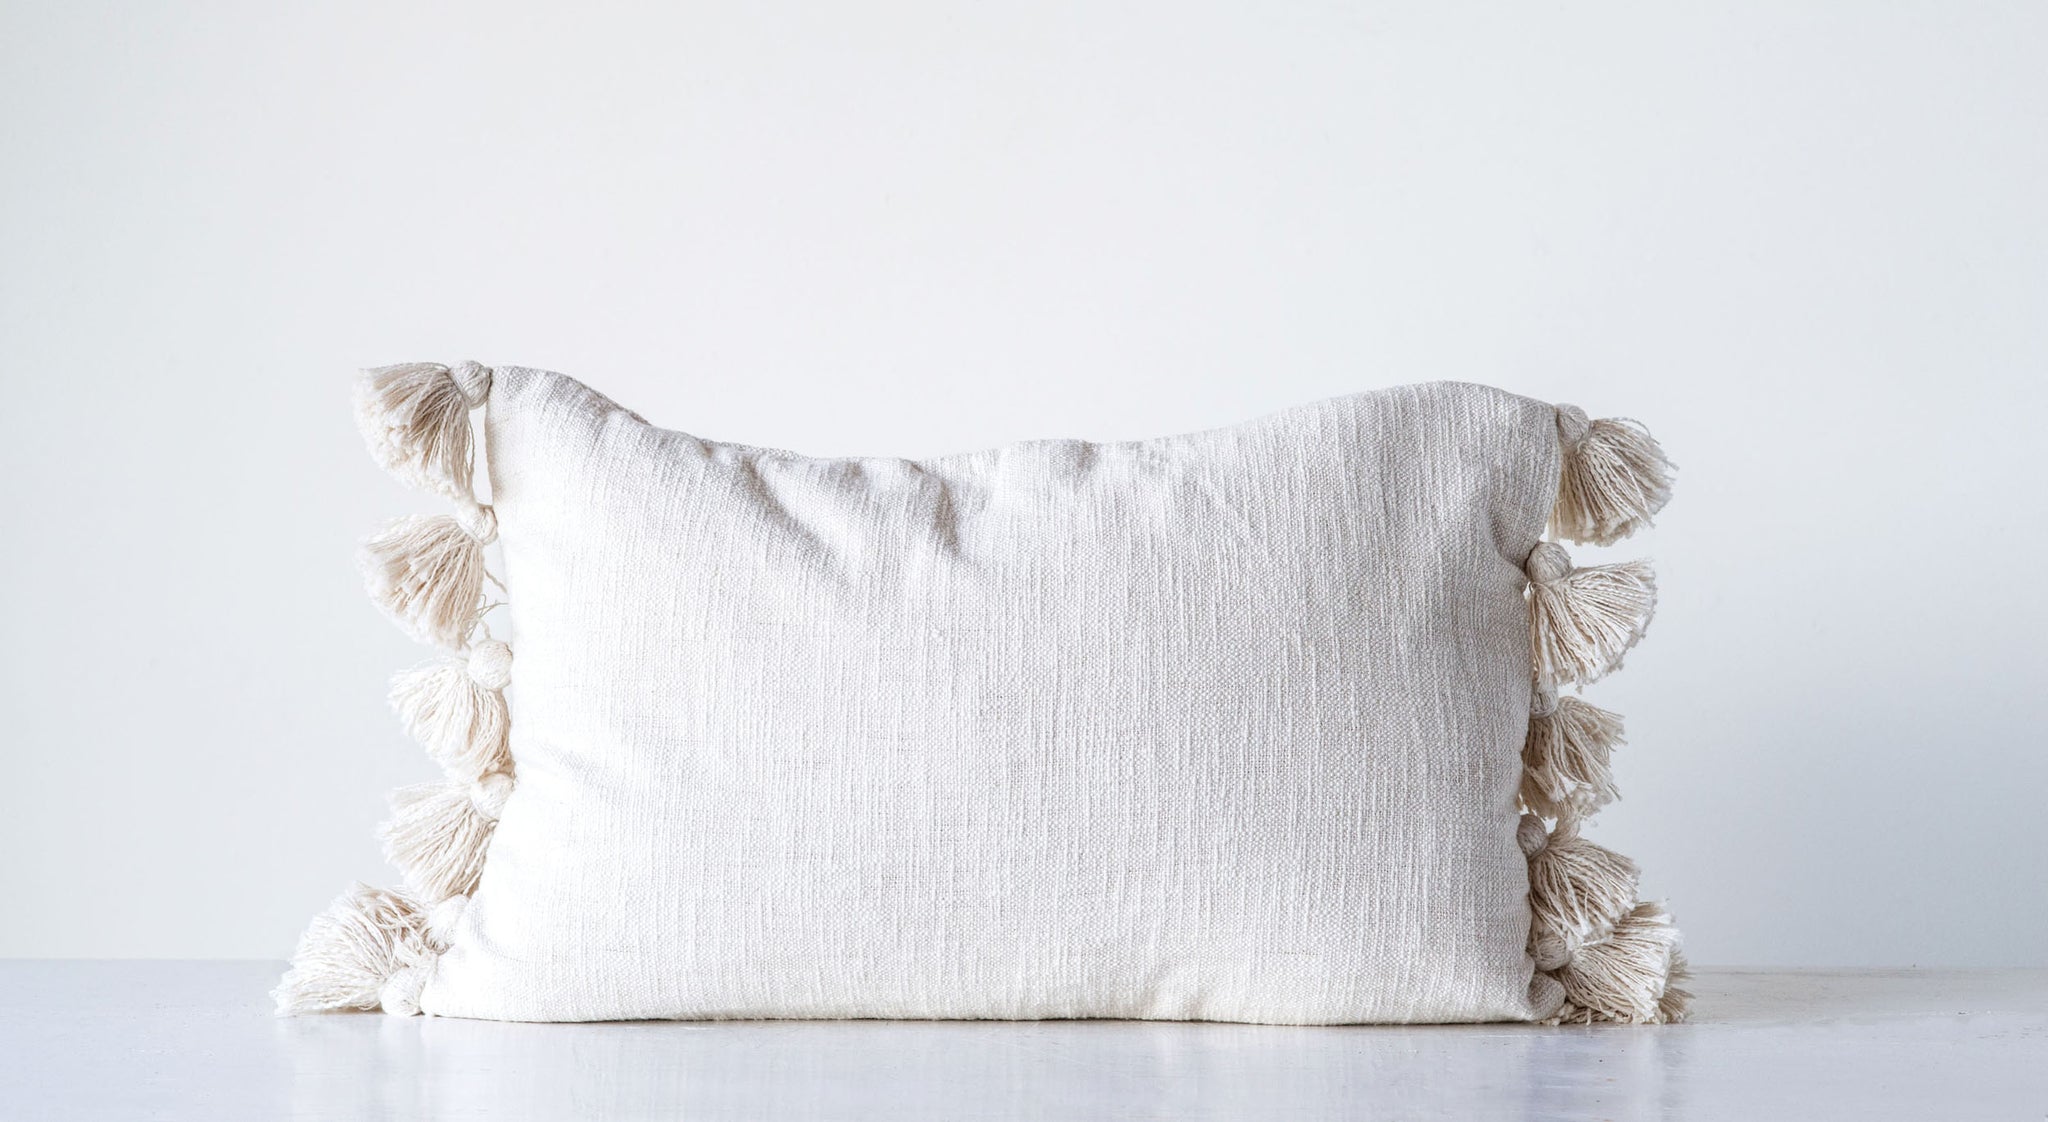 24"L x 16"H Woven Cotton Slub Lumbar Pillow w/ Tassels, Cream Color